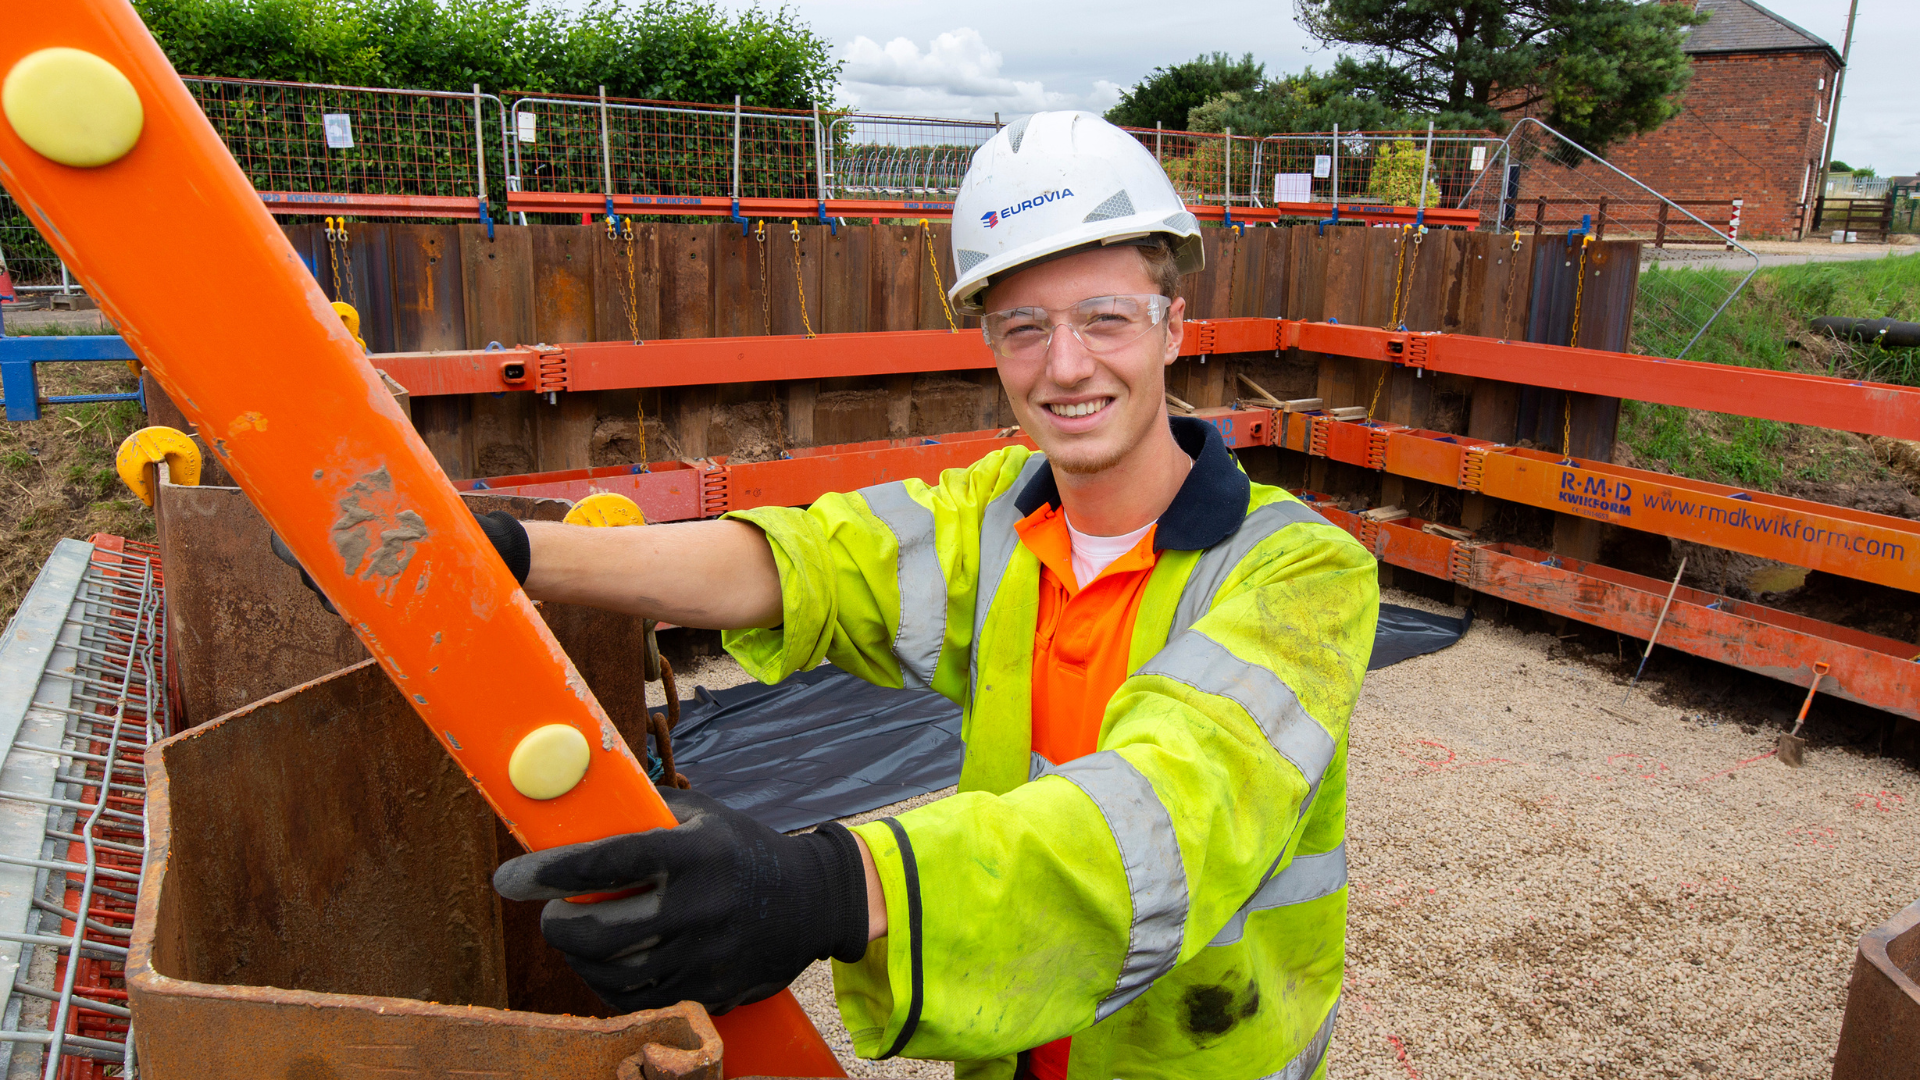 Charlie Butler, apprentice, stands in PPE on a ladder